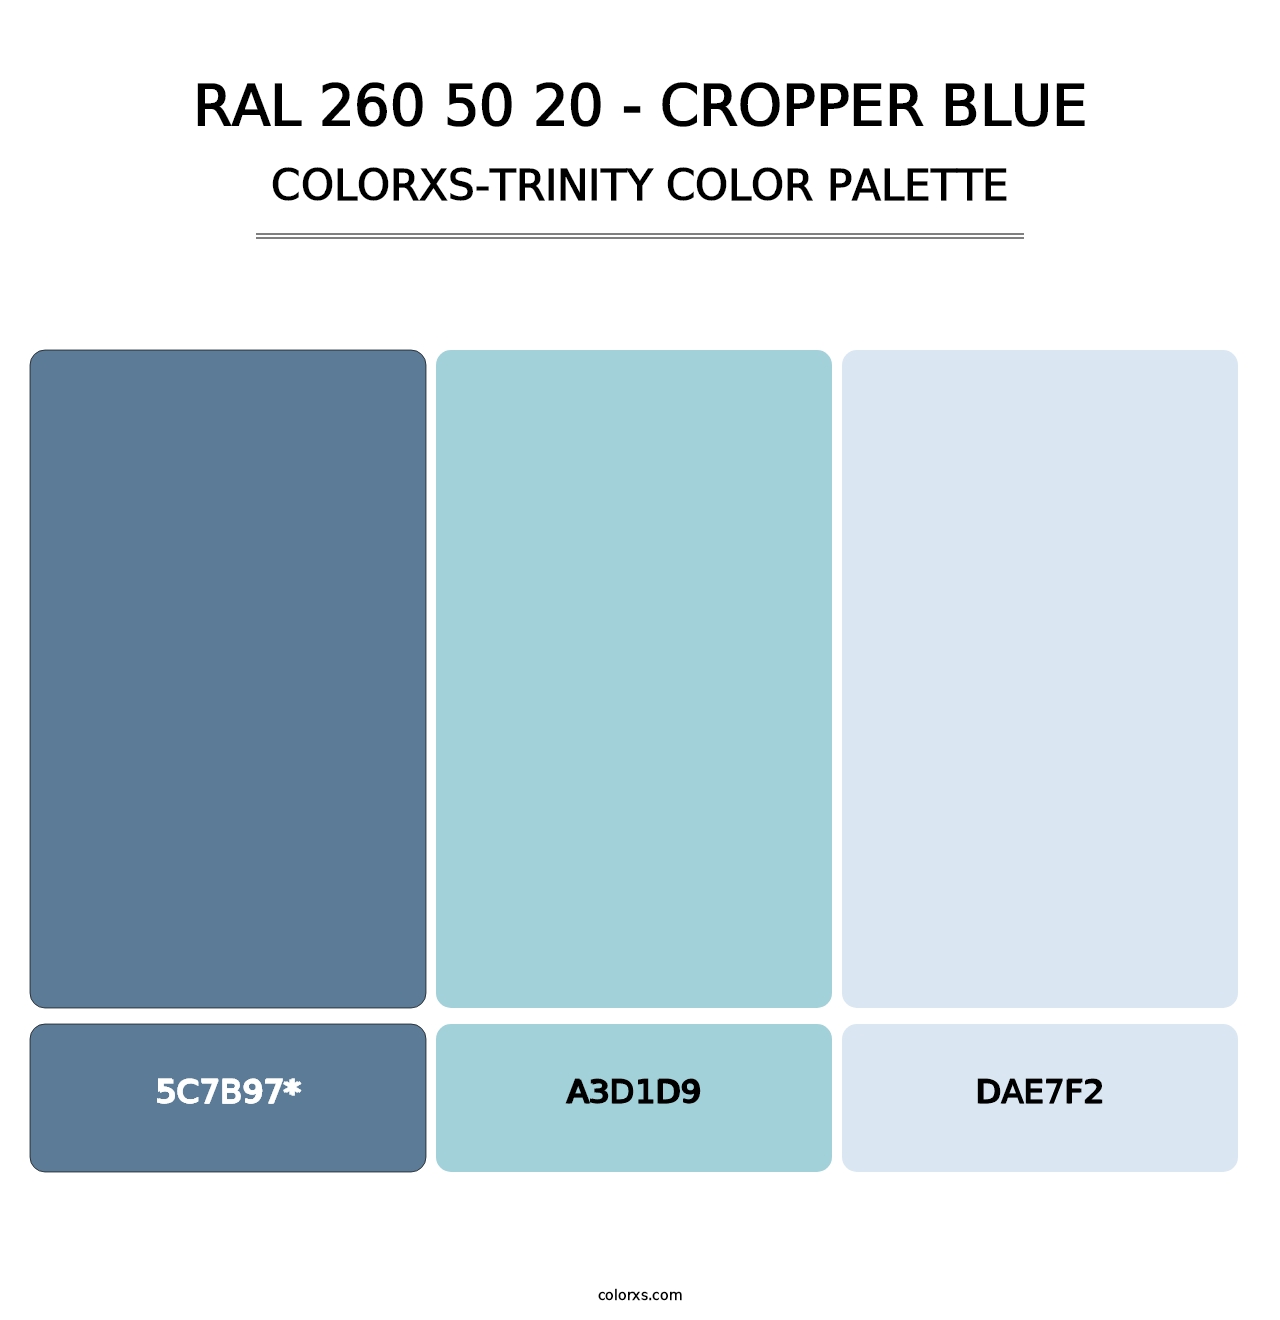 RAL 260 50 20 - Cropper Blue - Colorxs Trinity Palette